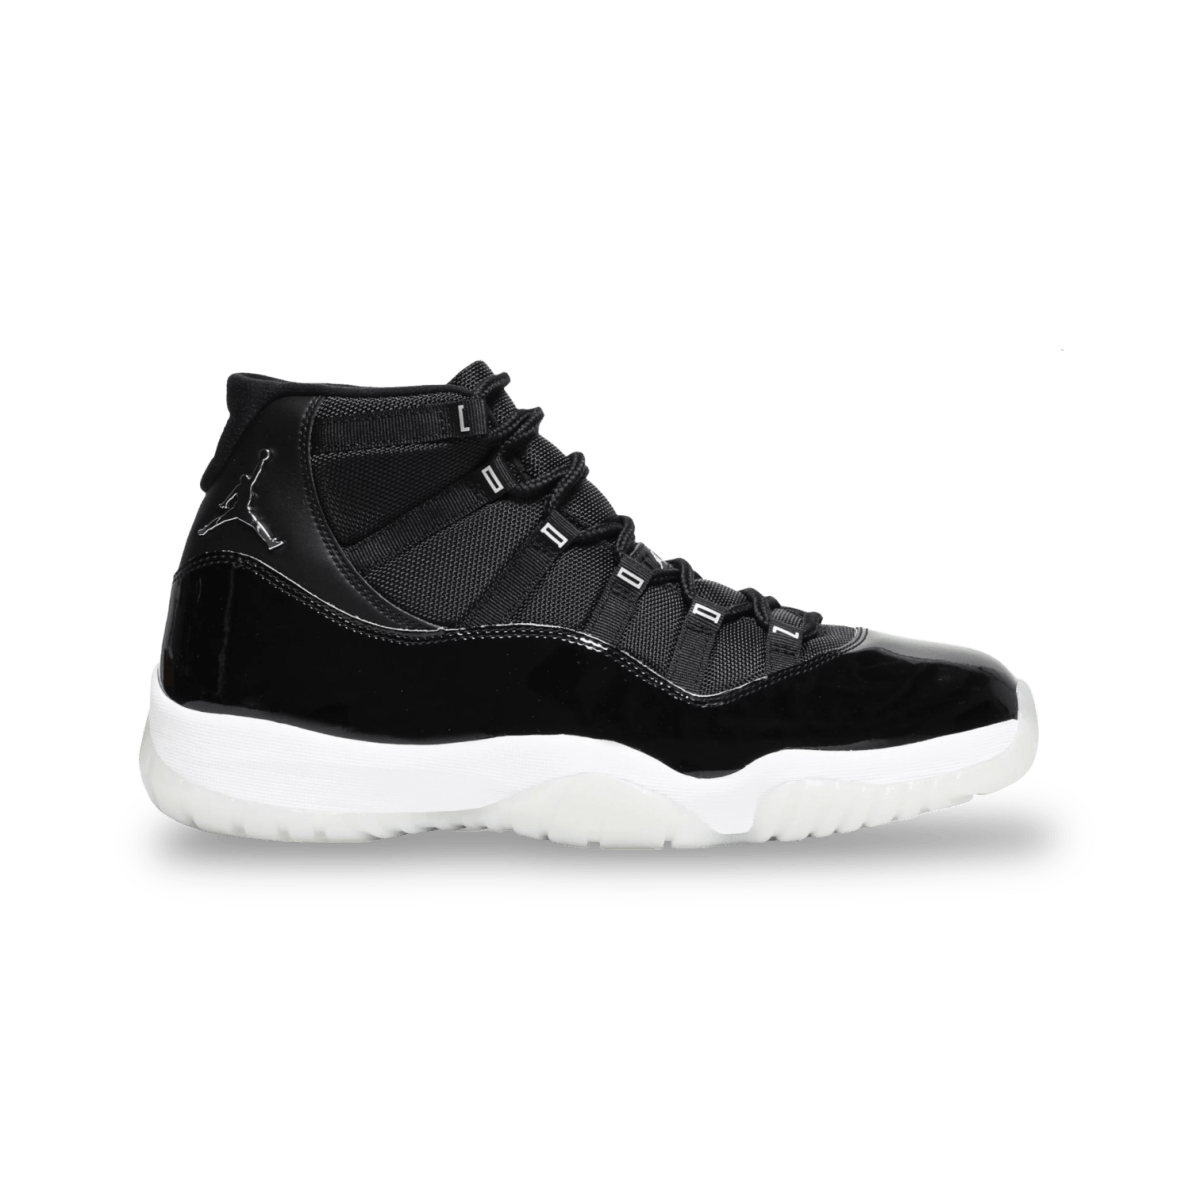 Air Jordan 11 Retro 'Jubilee / 25th Anniversary' Black - Grade School - High Sneaker - Jawns on Fire Sneakers & Streetwear